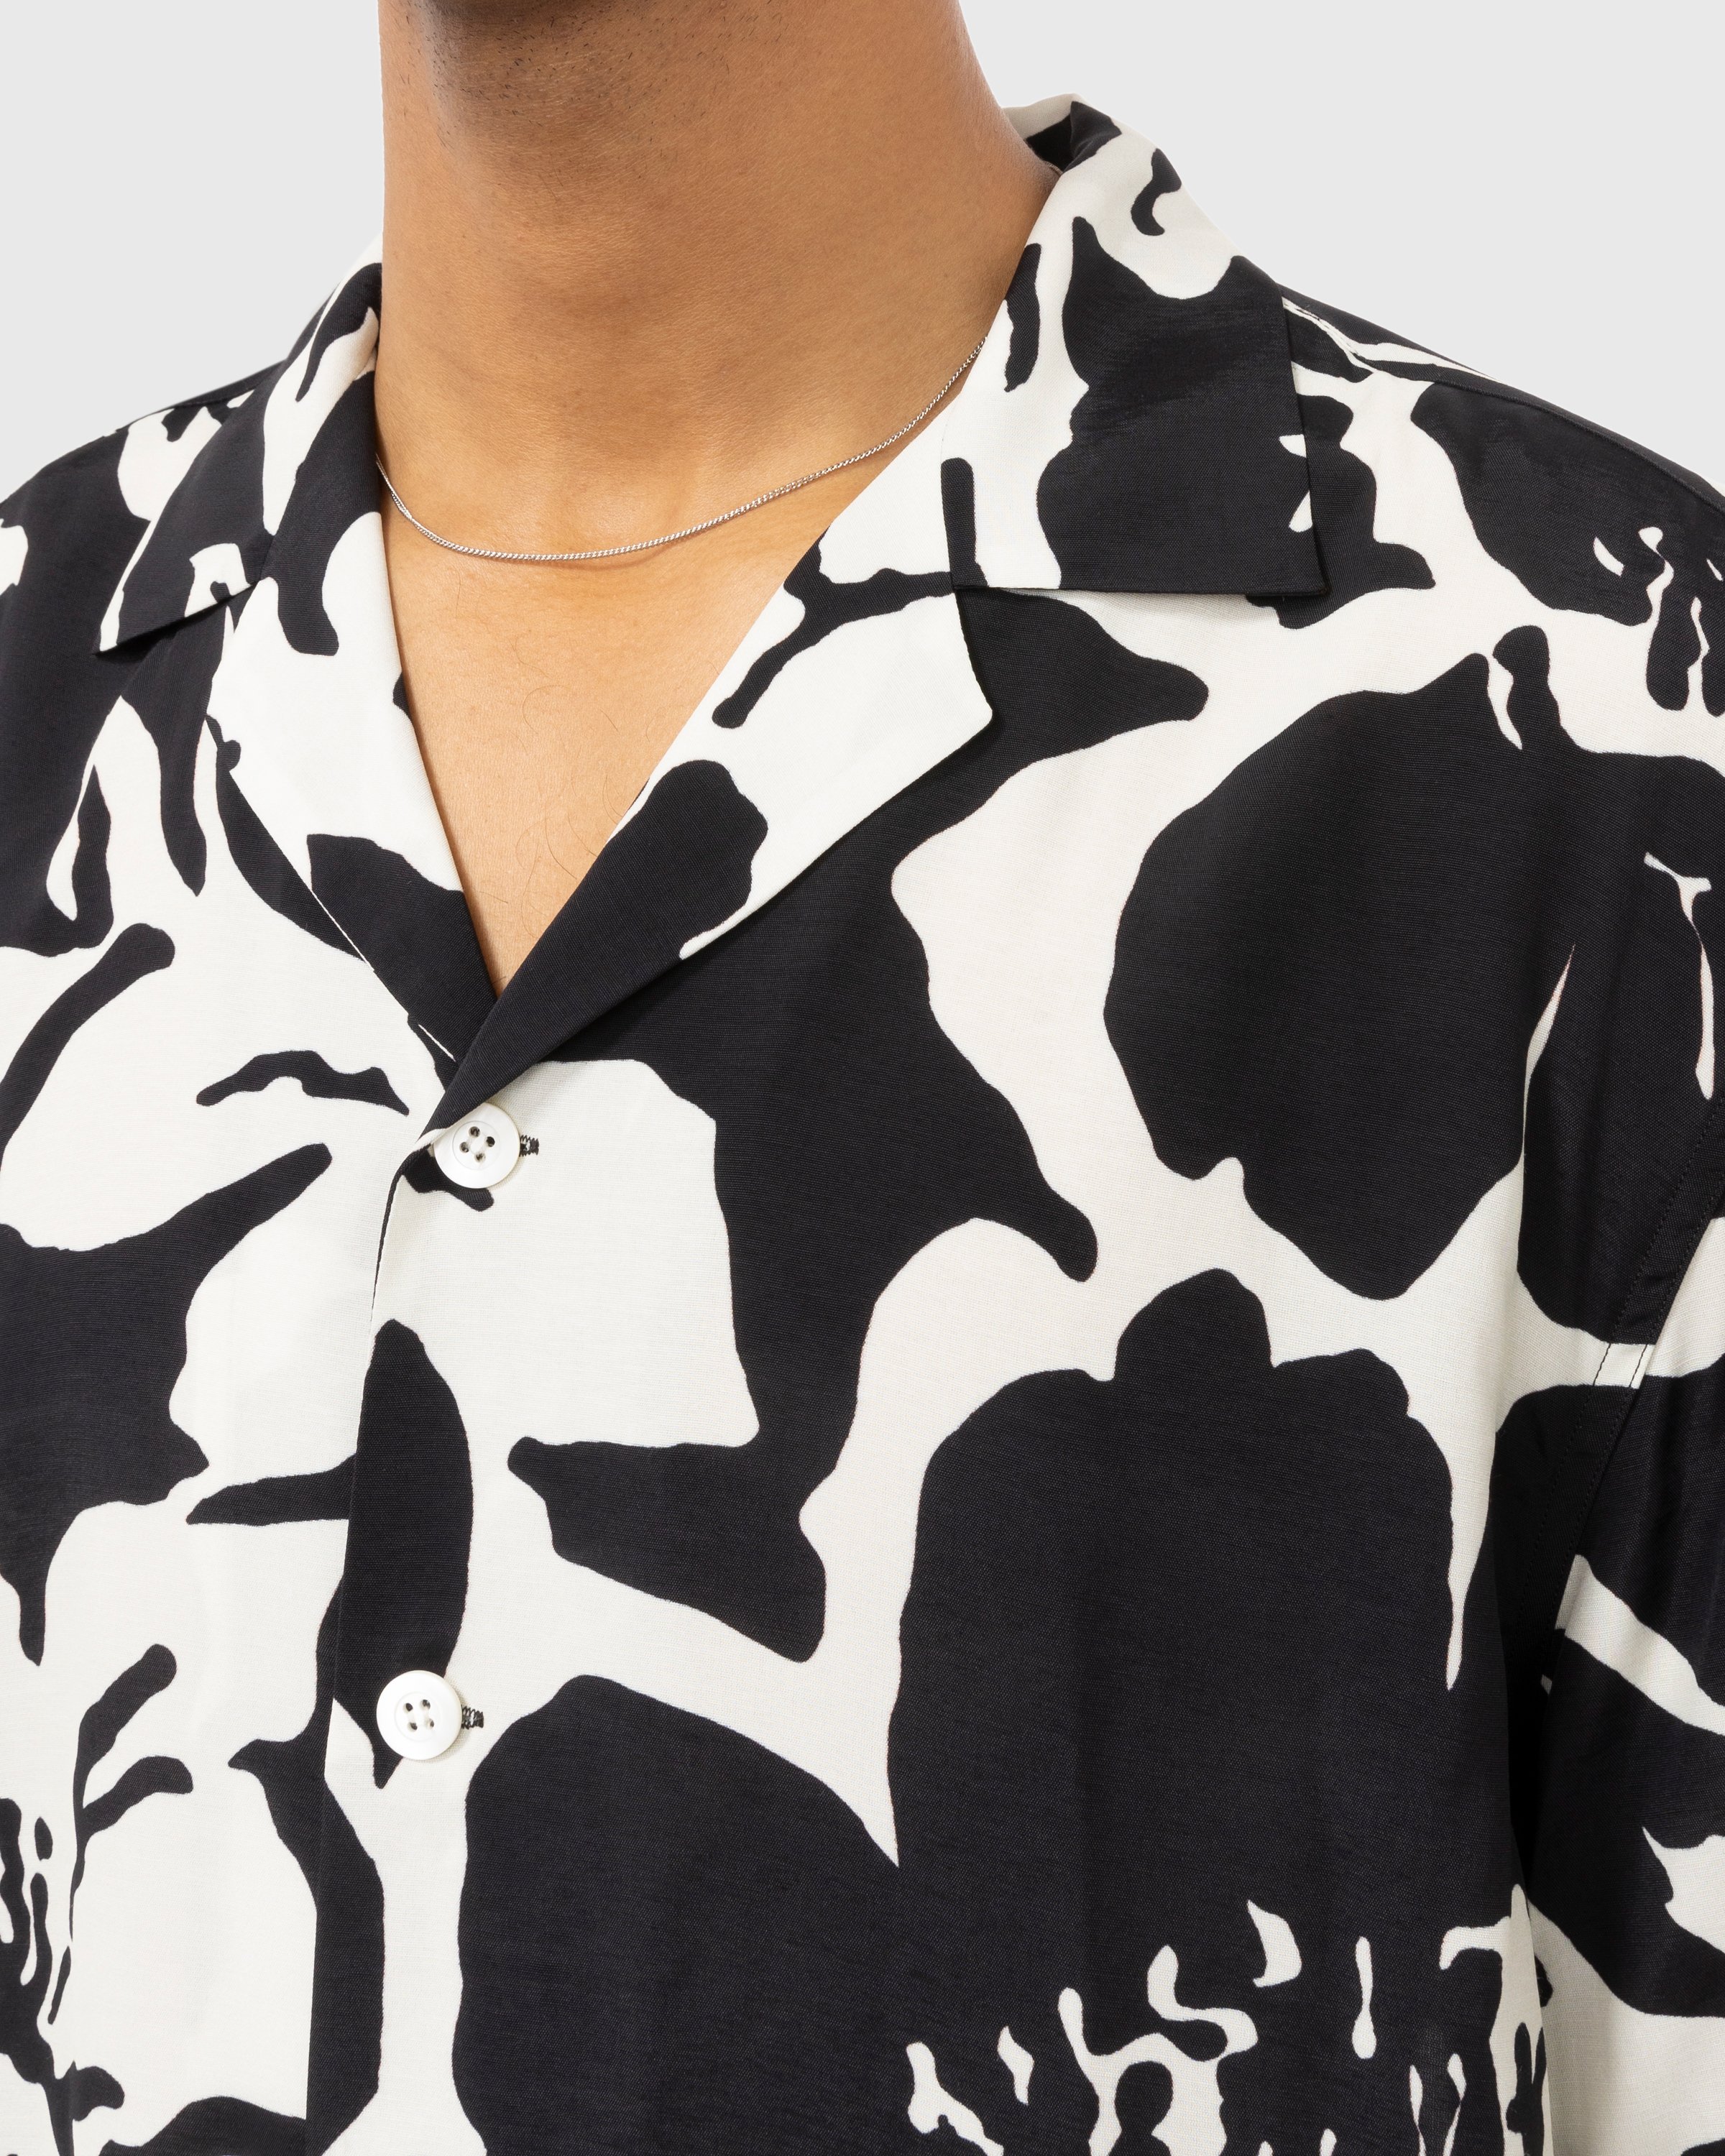 Dries van Noten - Floral Cassi Shirt Multi - Clothing - Multi - Image 5